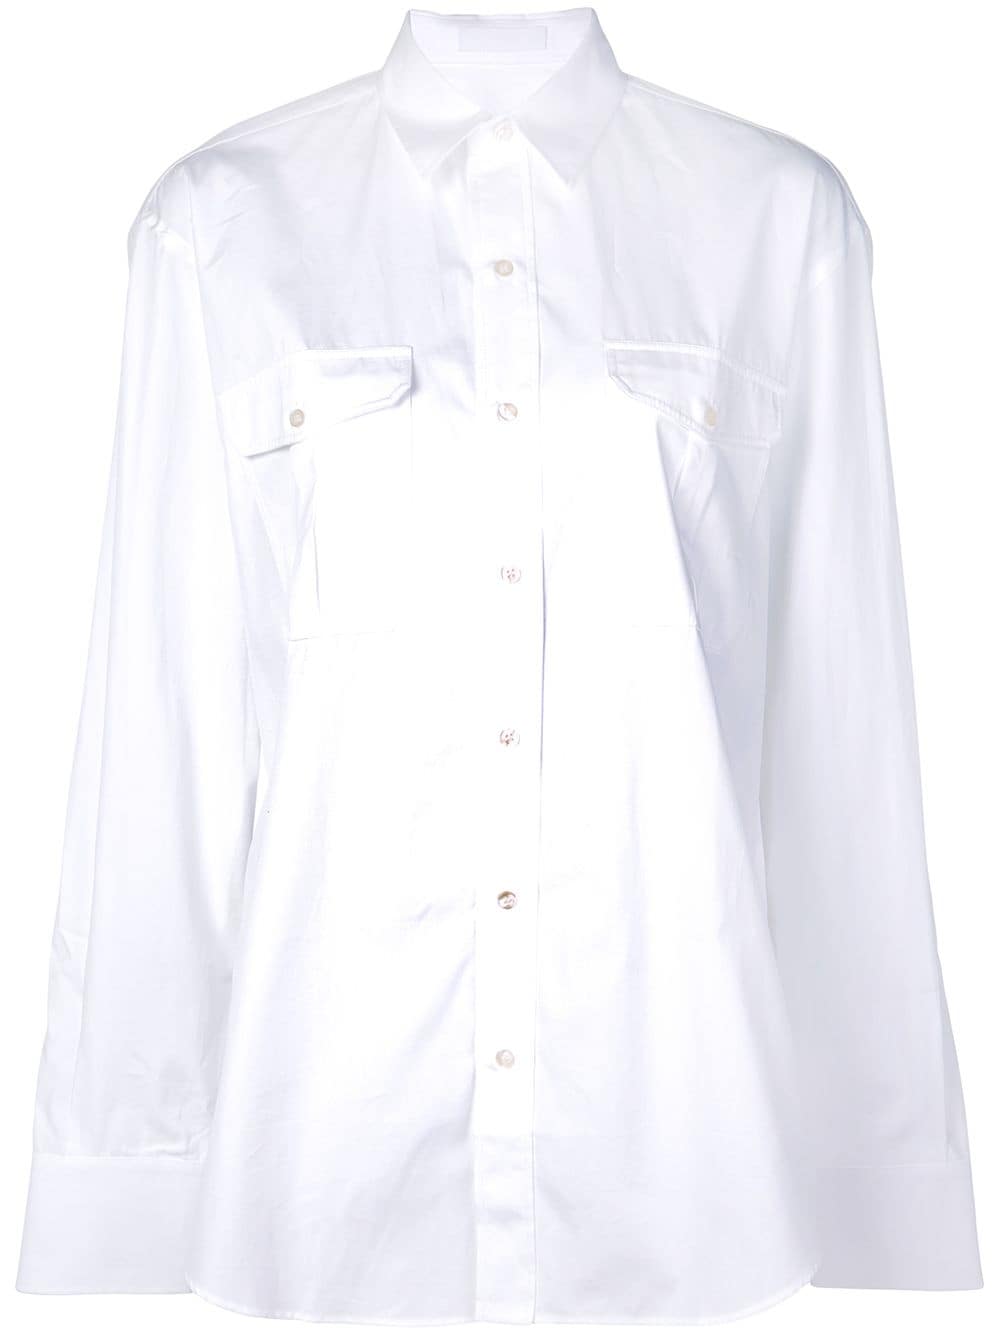 Image 1 of WARDROBE.NYC Release 03 tailored poplin shirt